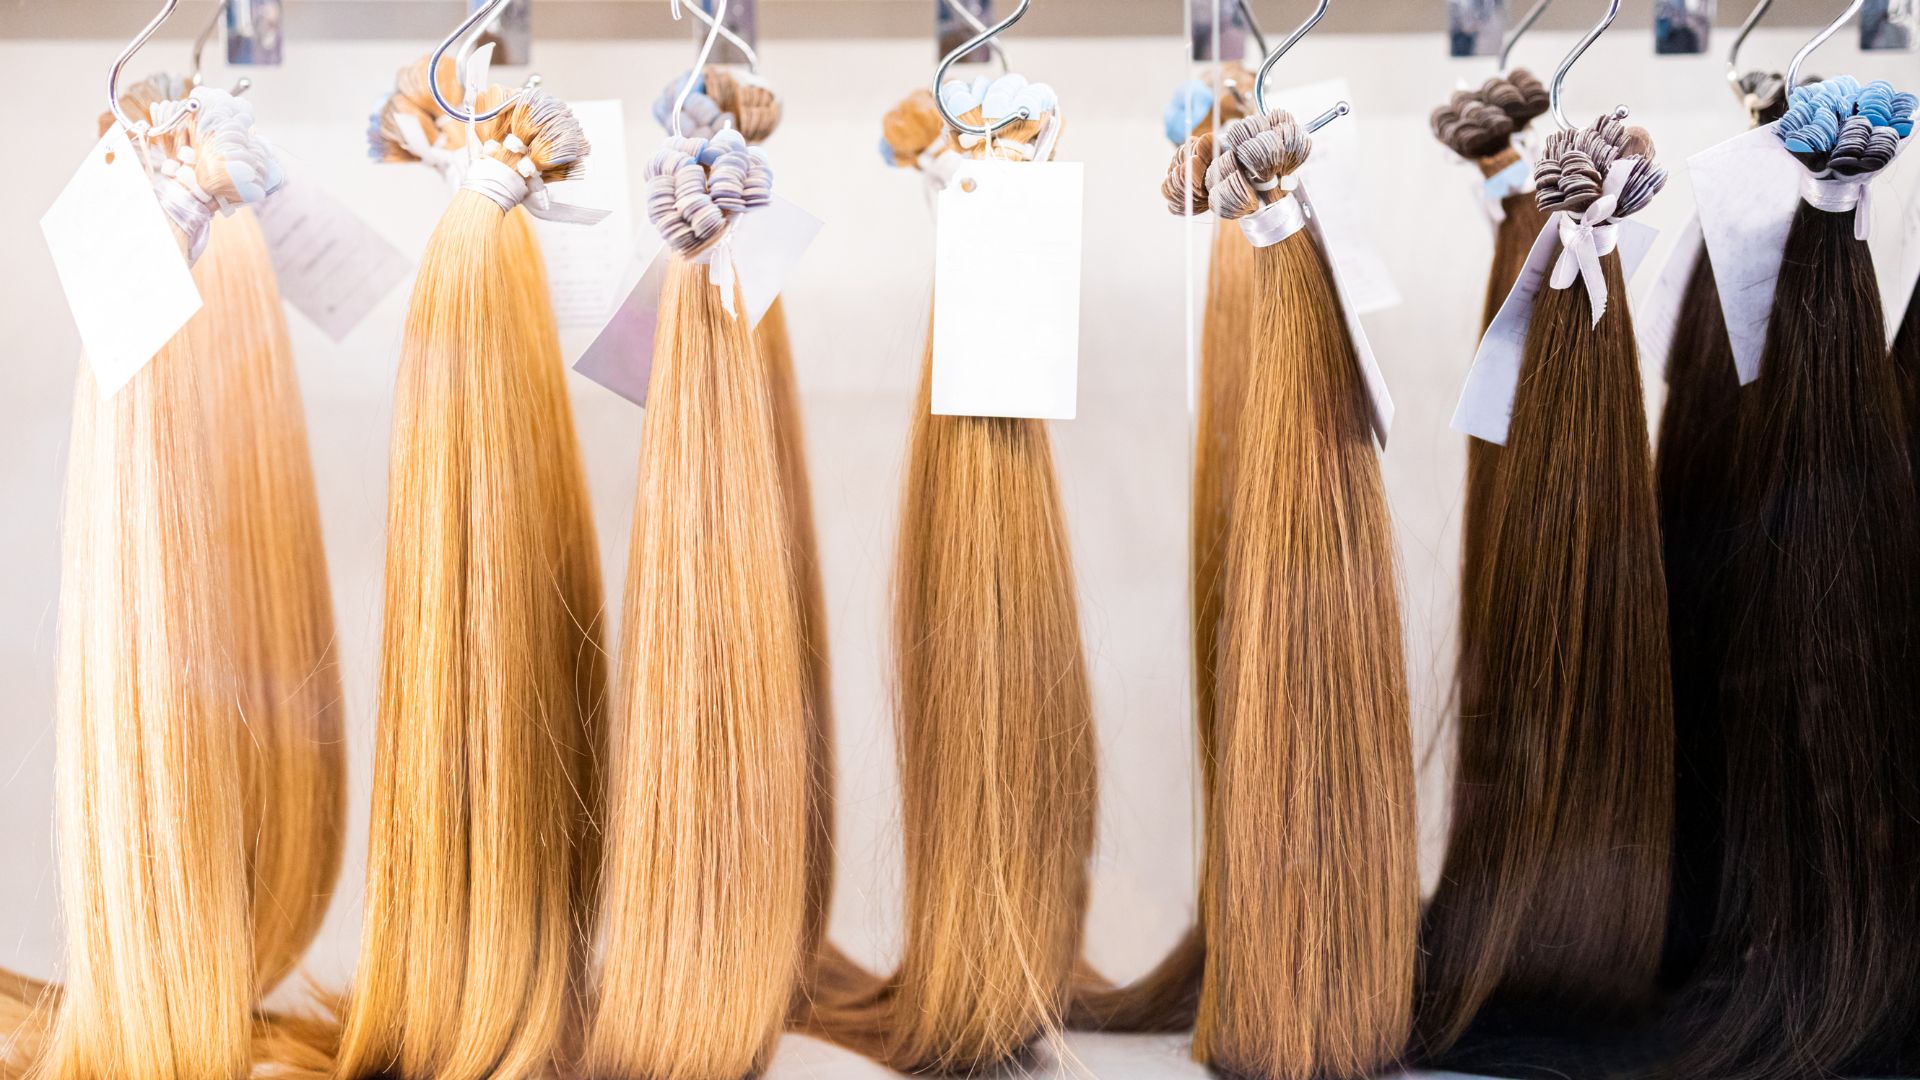 Range of hair extensions hanging.